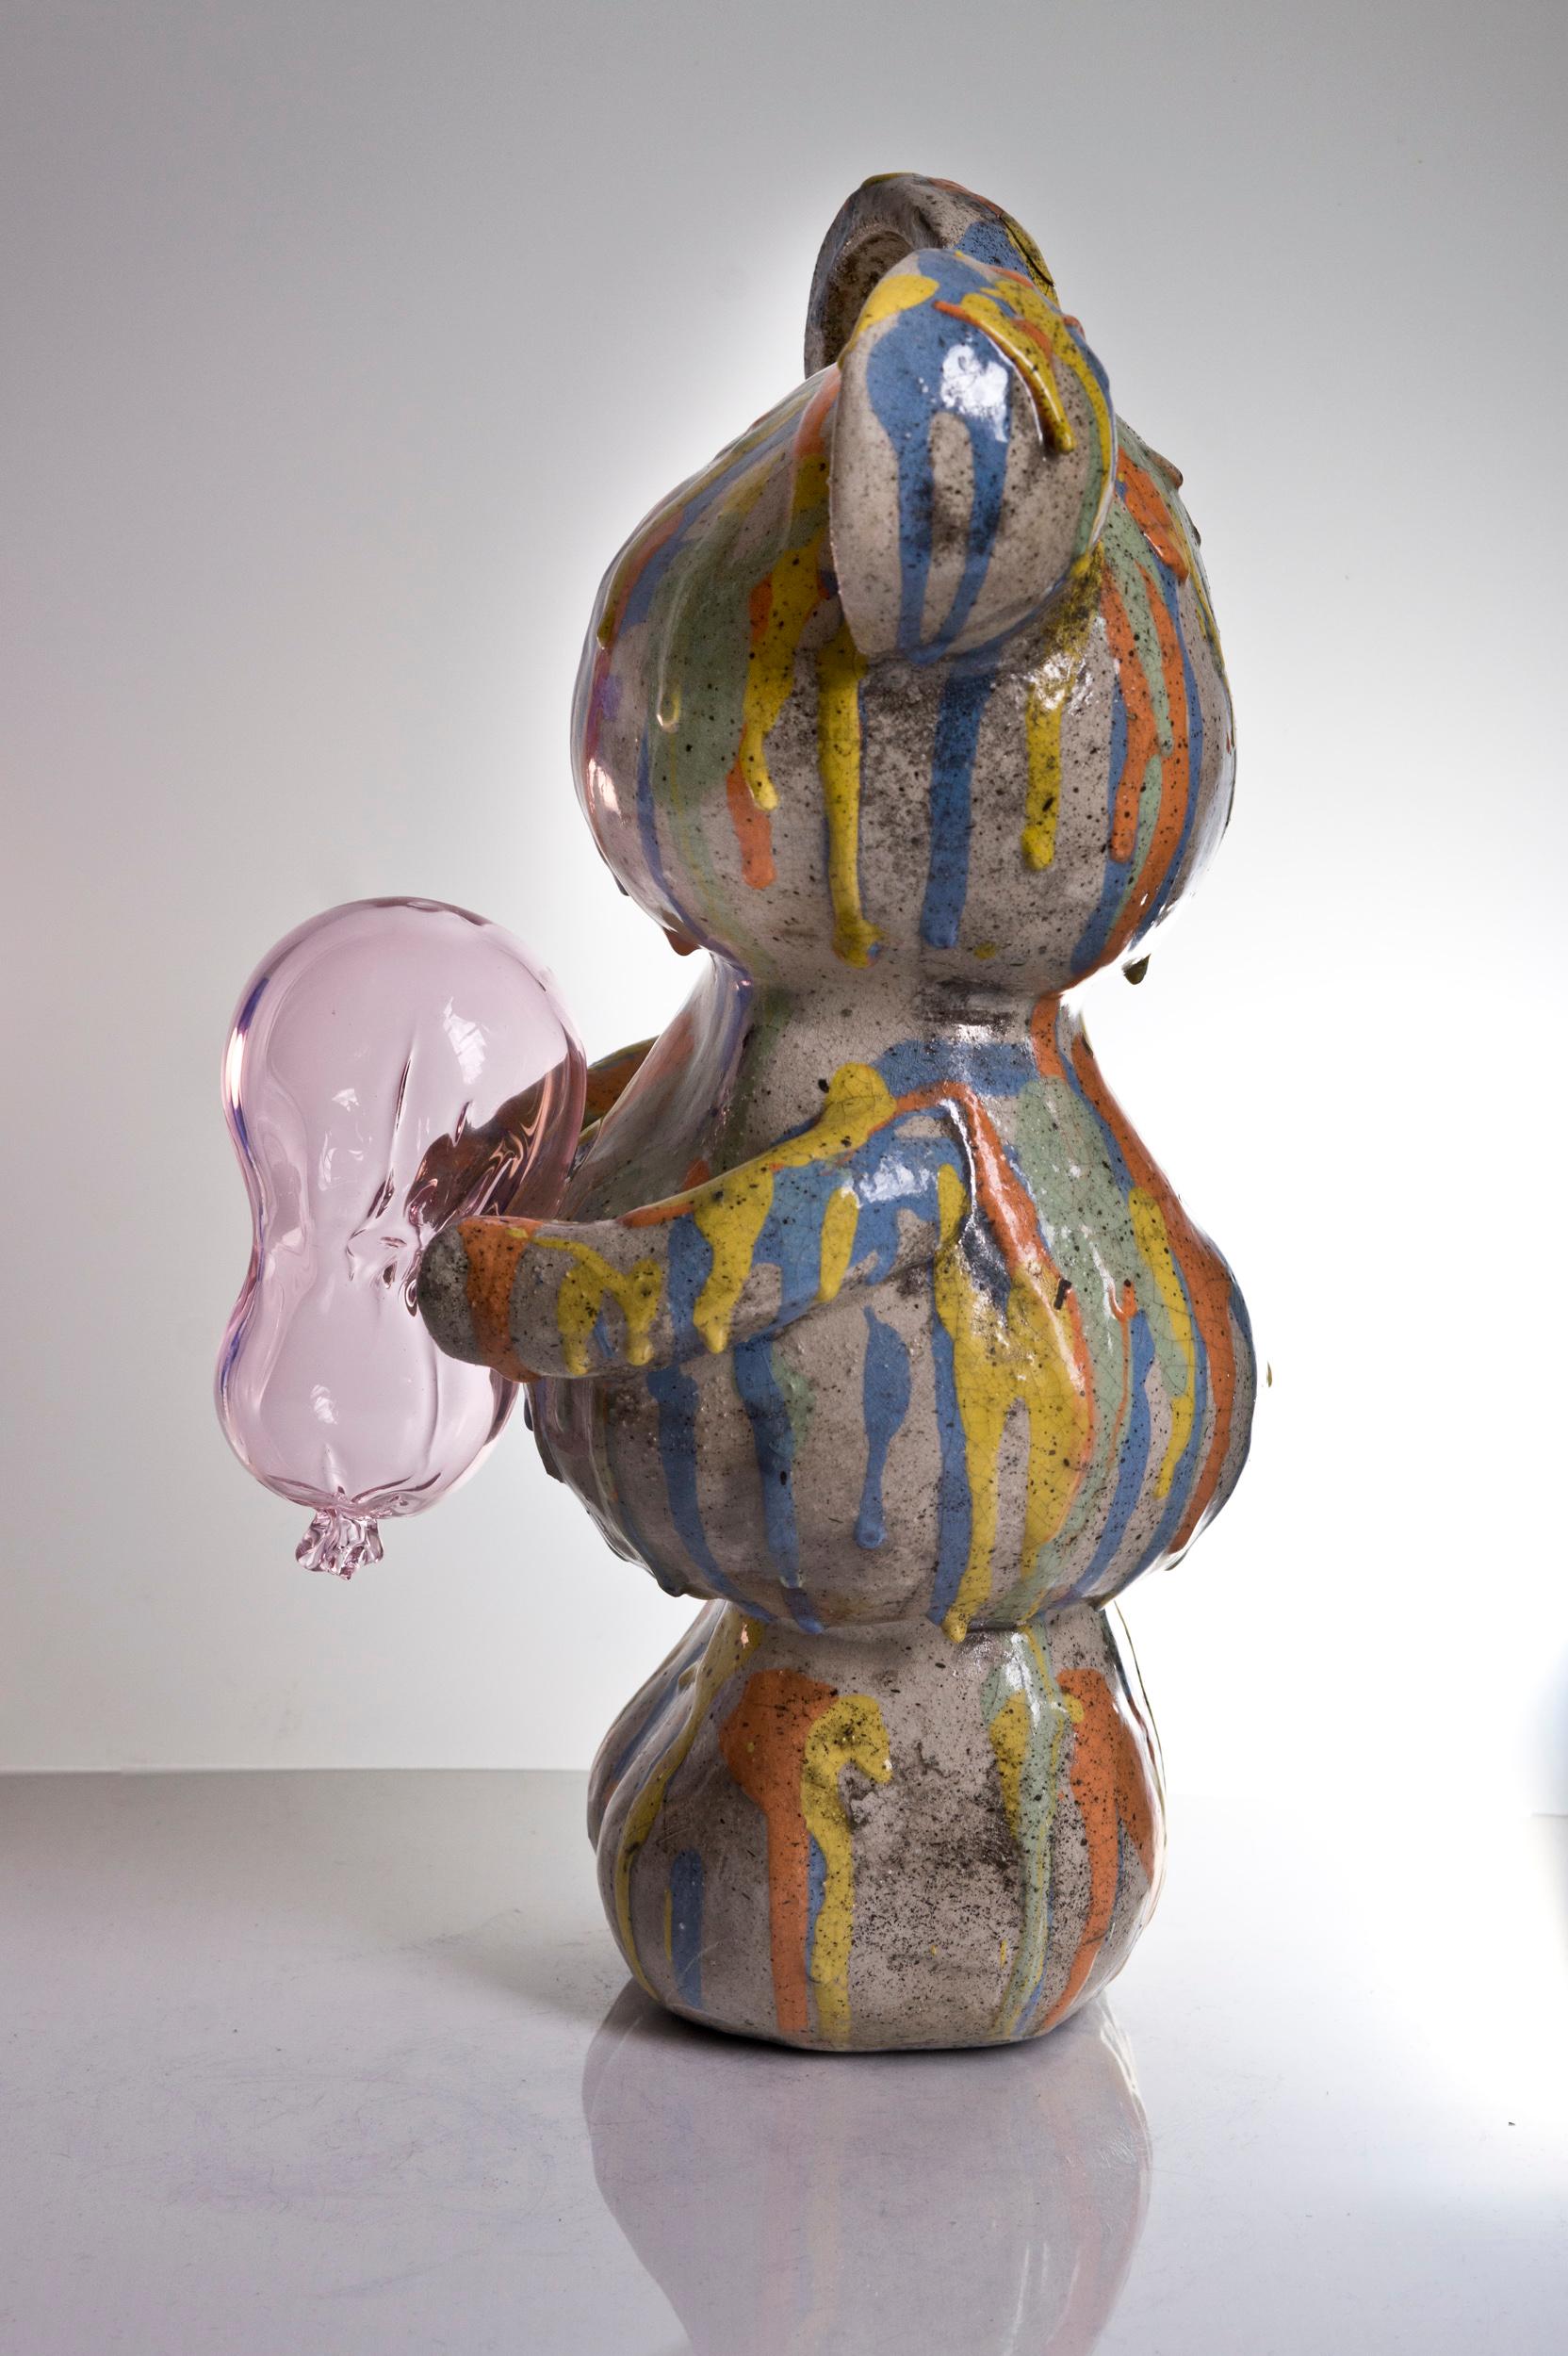 The Messy Teddy - Beige Figurative Sculpture by Agustina Garrigou